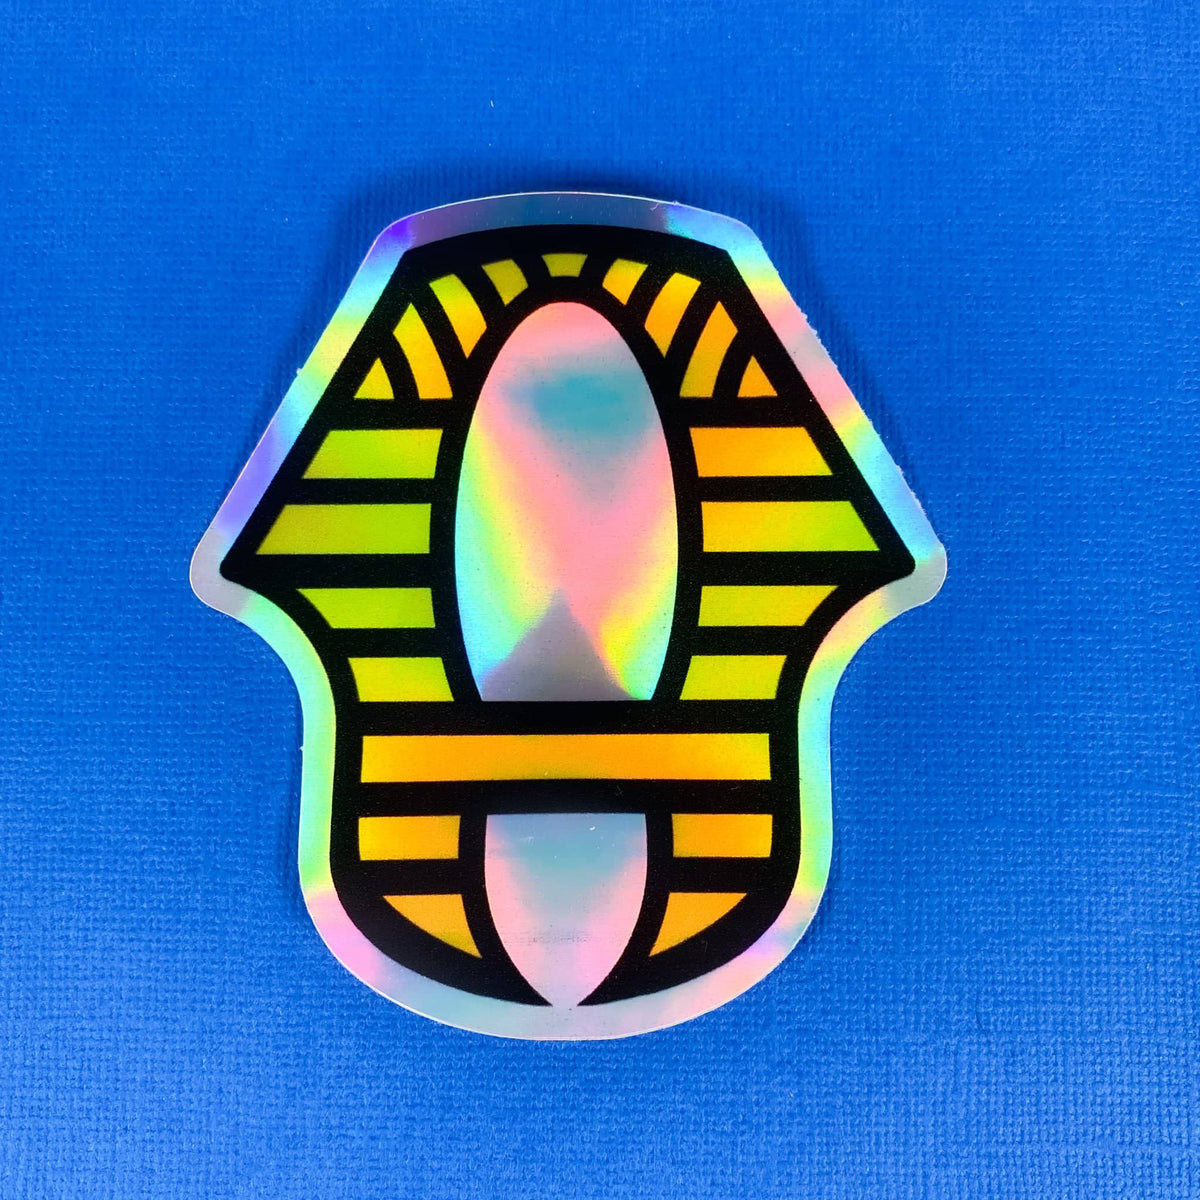 Pharaoh shaped holographic sticker